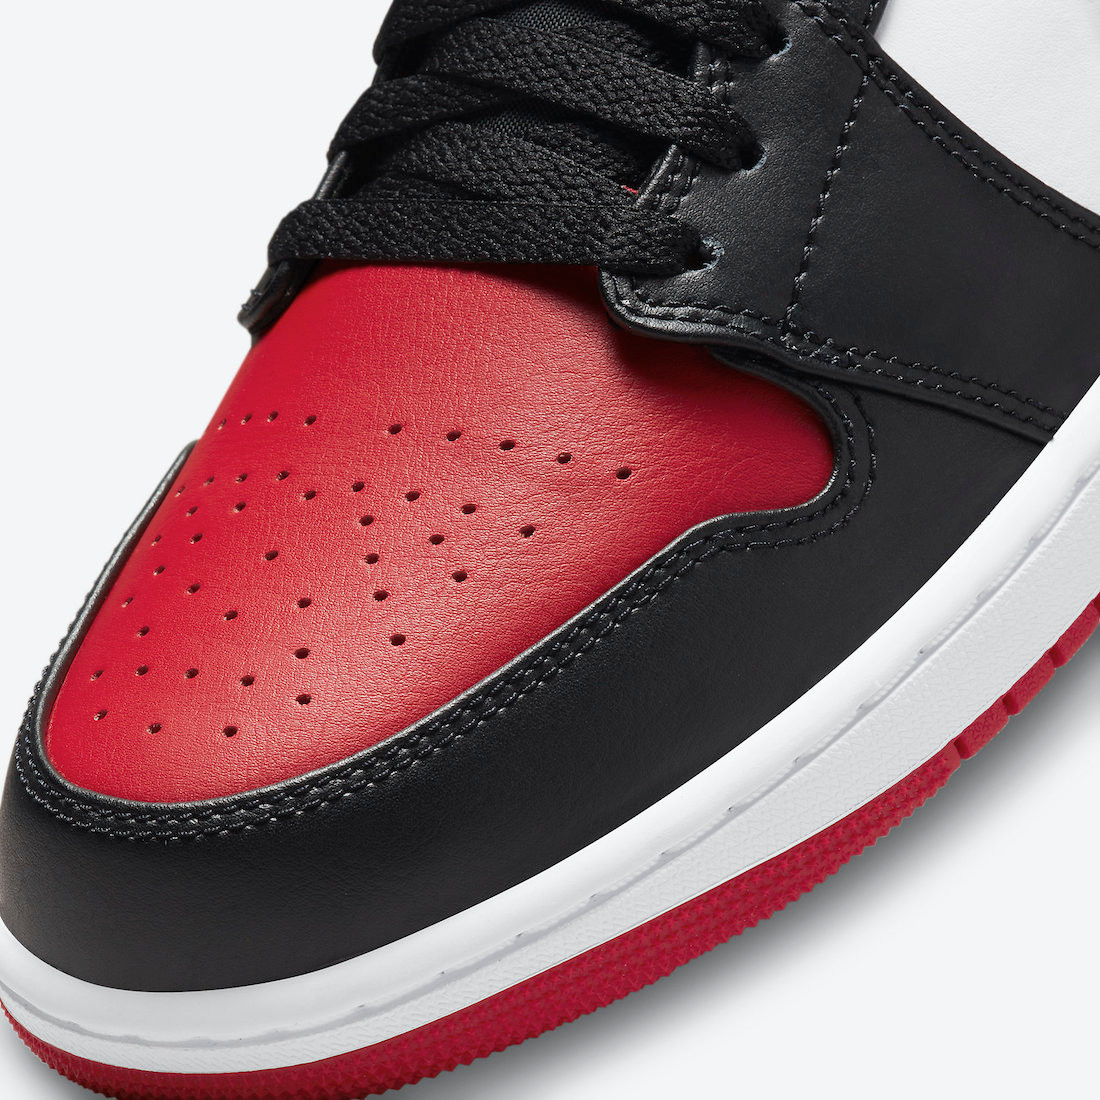 Nike Womens Air Jordan 1 LV8D Elevated Lifestyle Sneakers (8.5